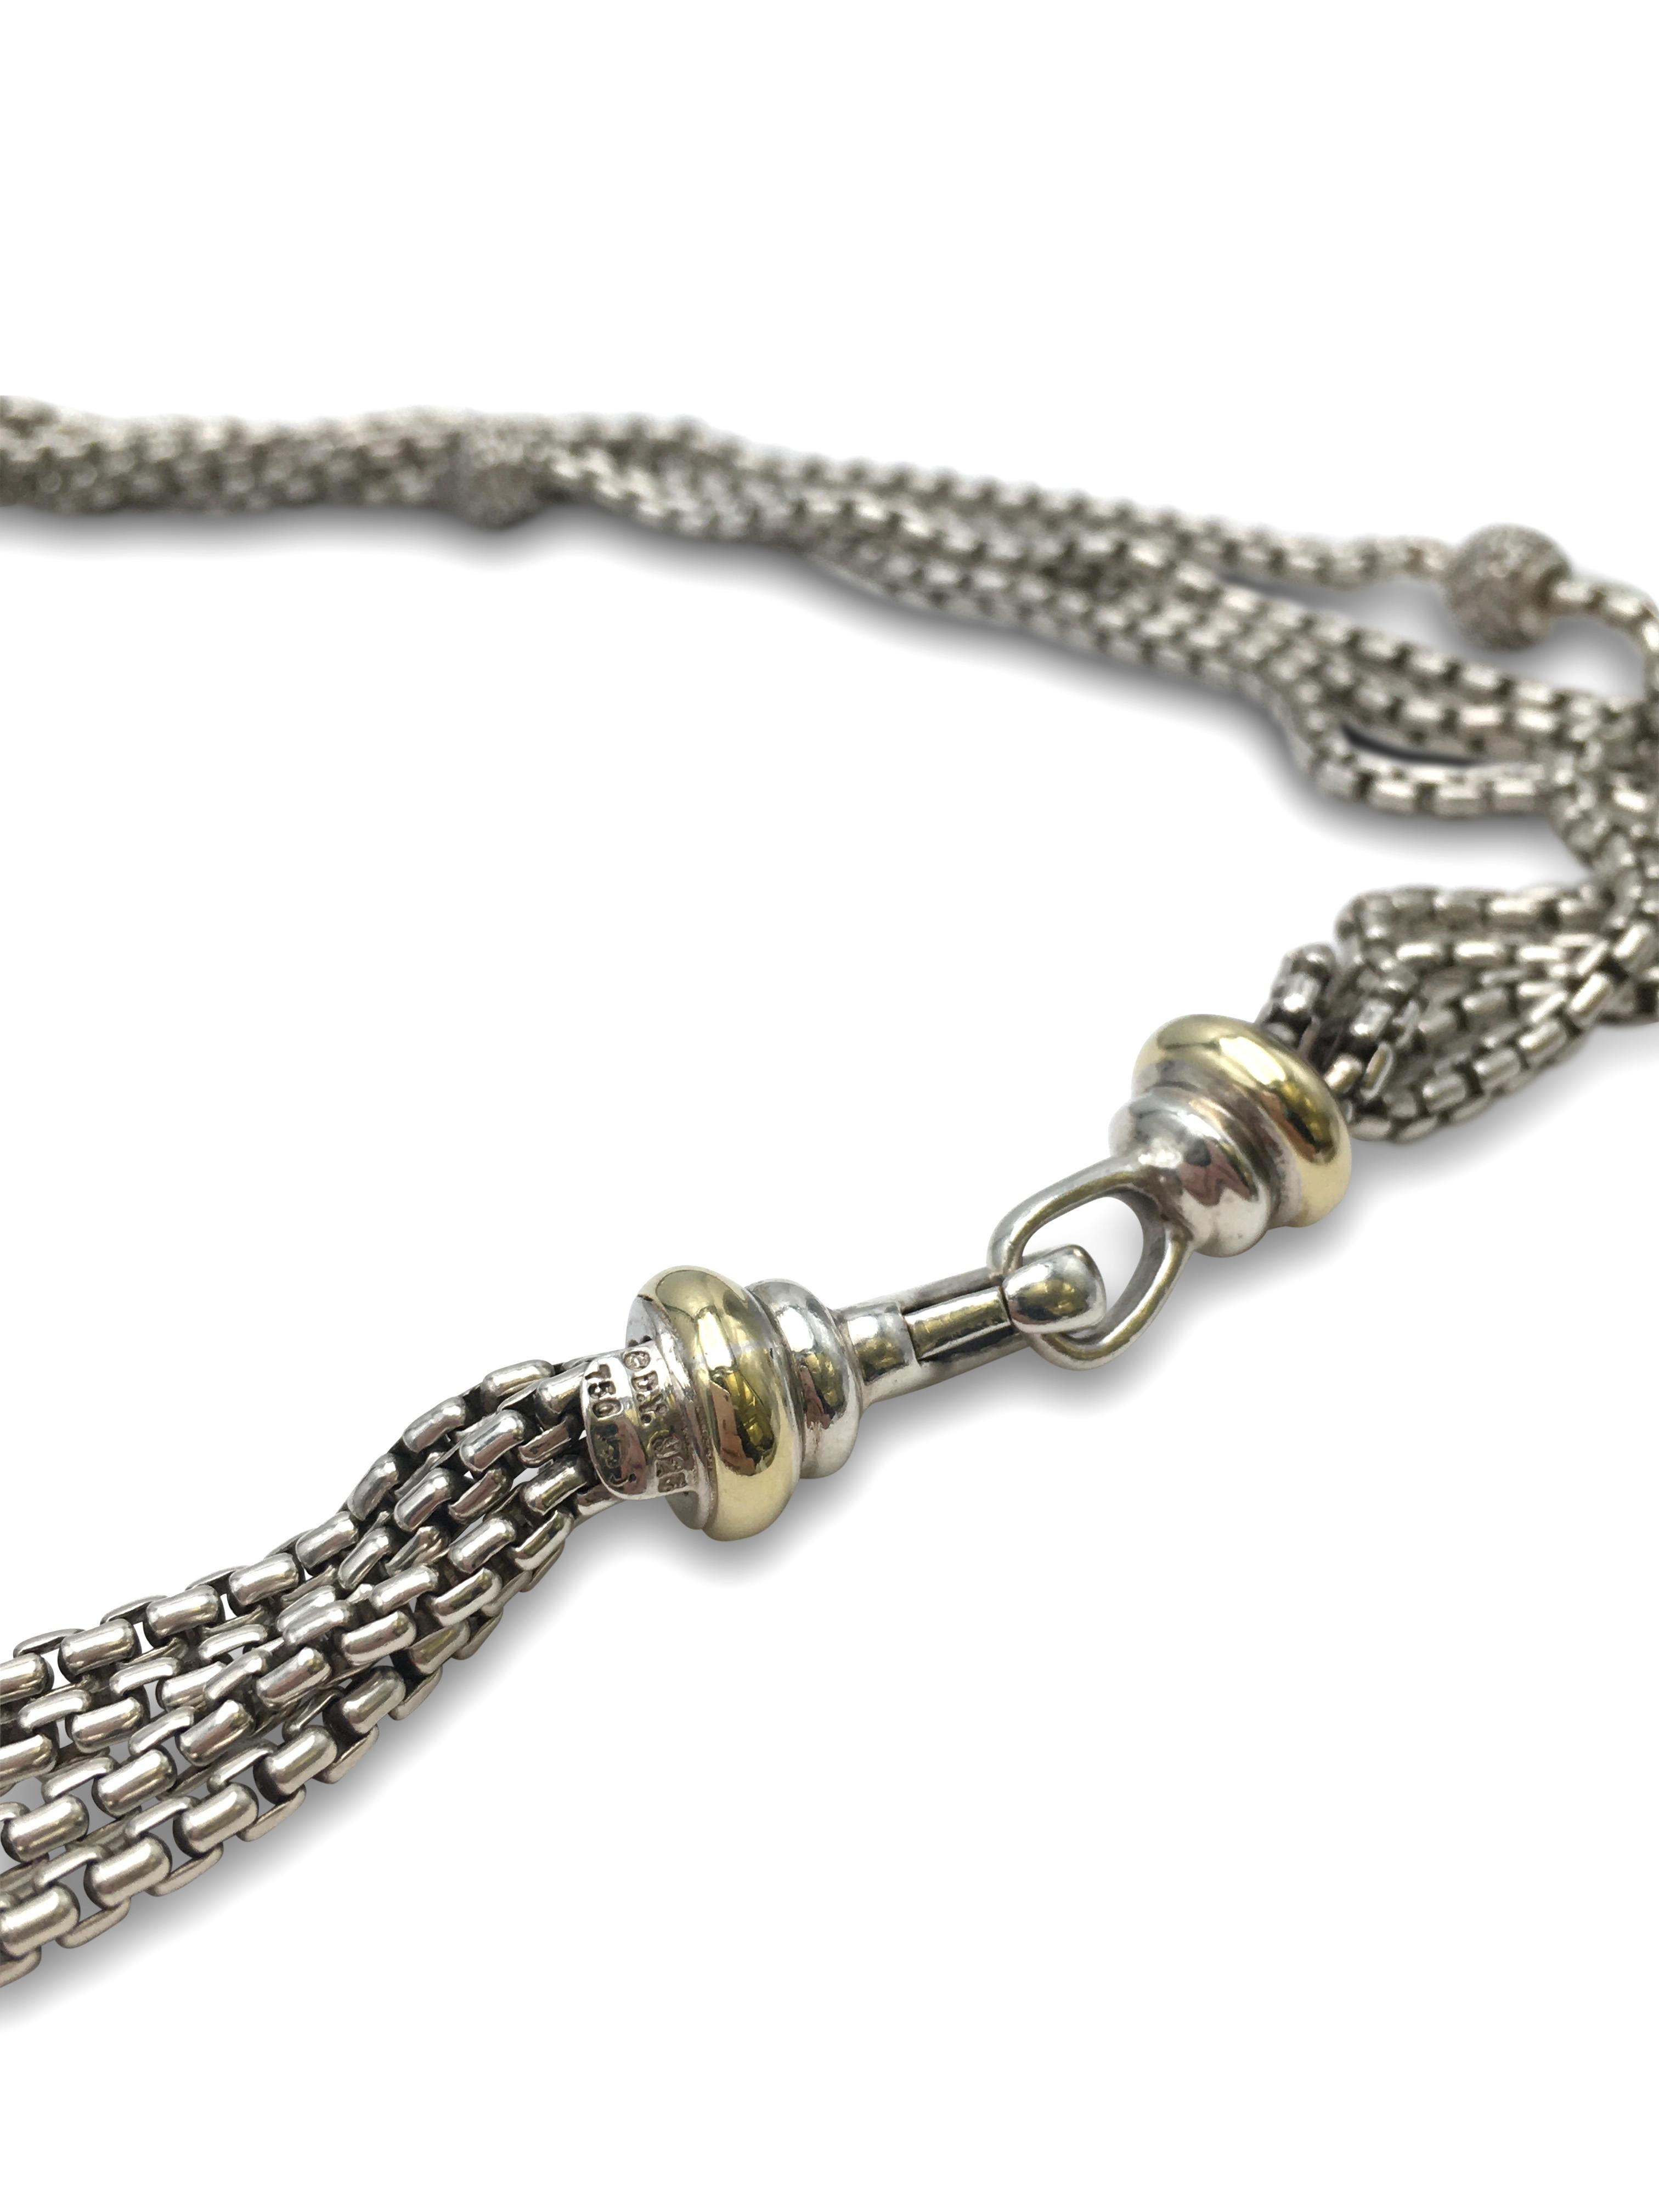 david yurman pendant necklace